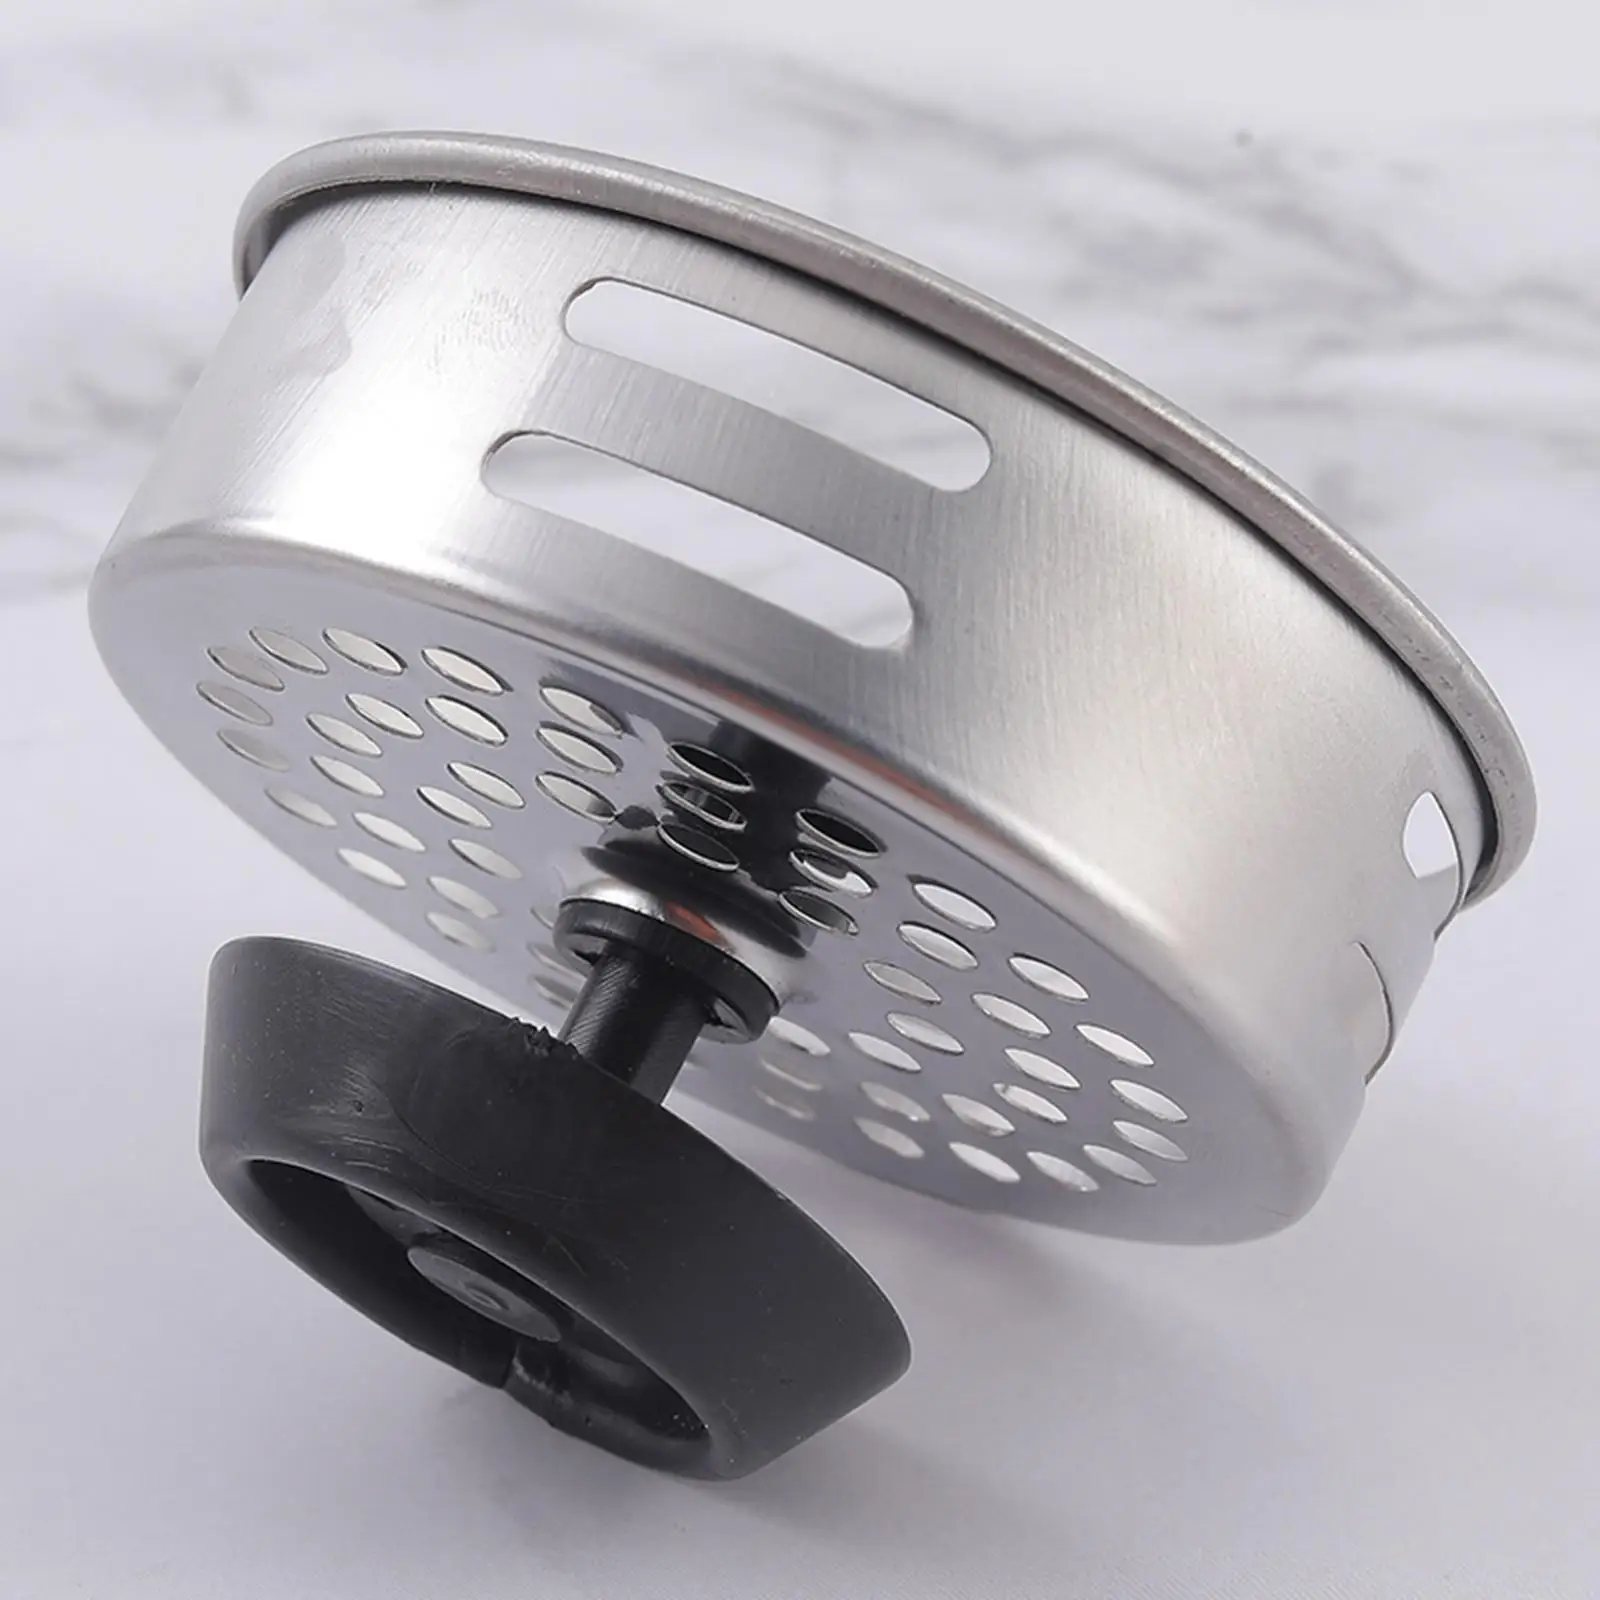 Sink Strainer Cleaning Supplies Wear Resistant Multipurpose Durable Practical Anti Blocking for Bathroom Toilet Restaurant